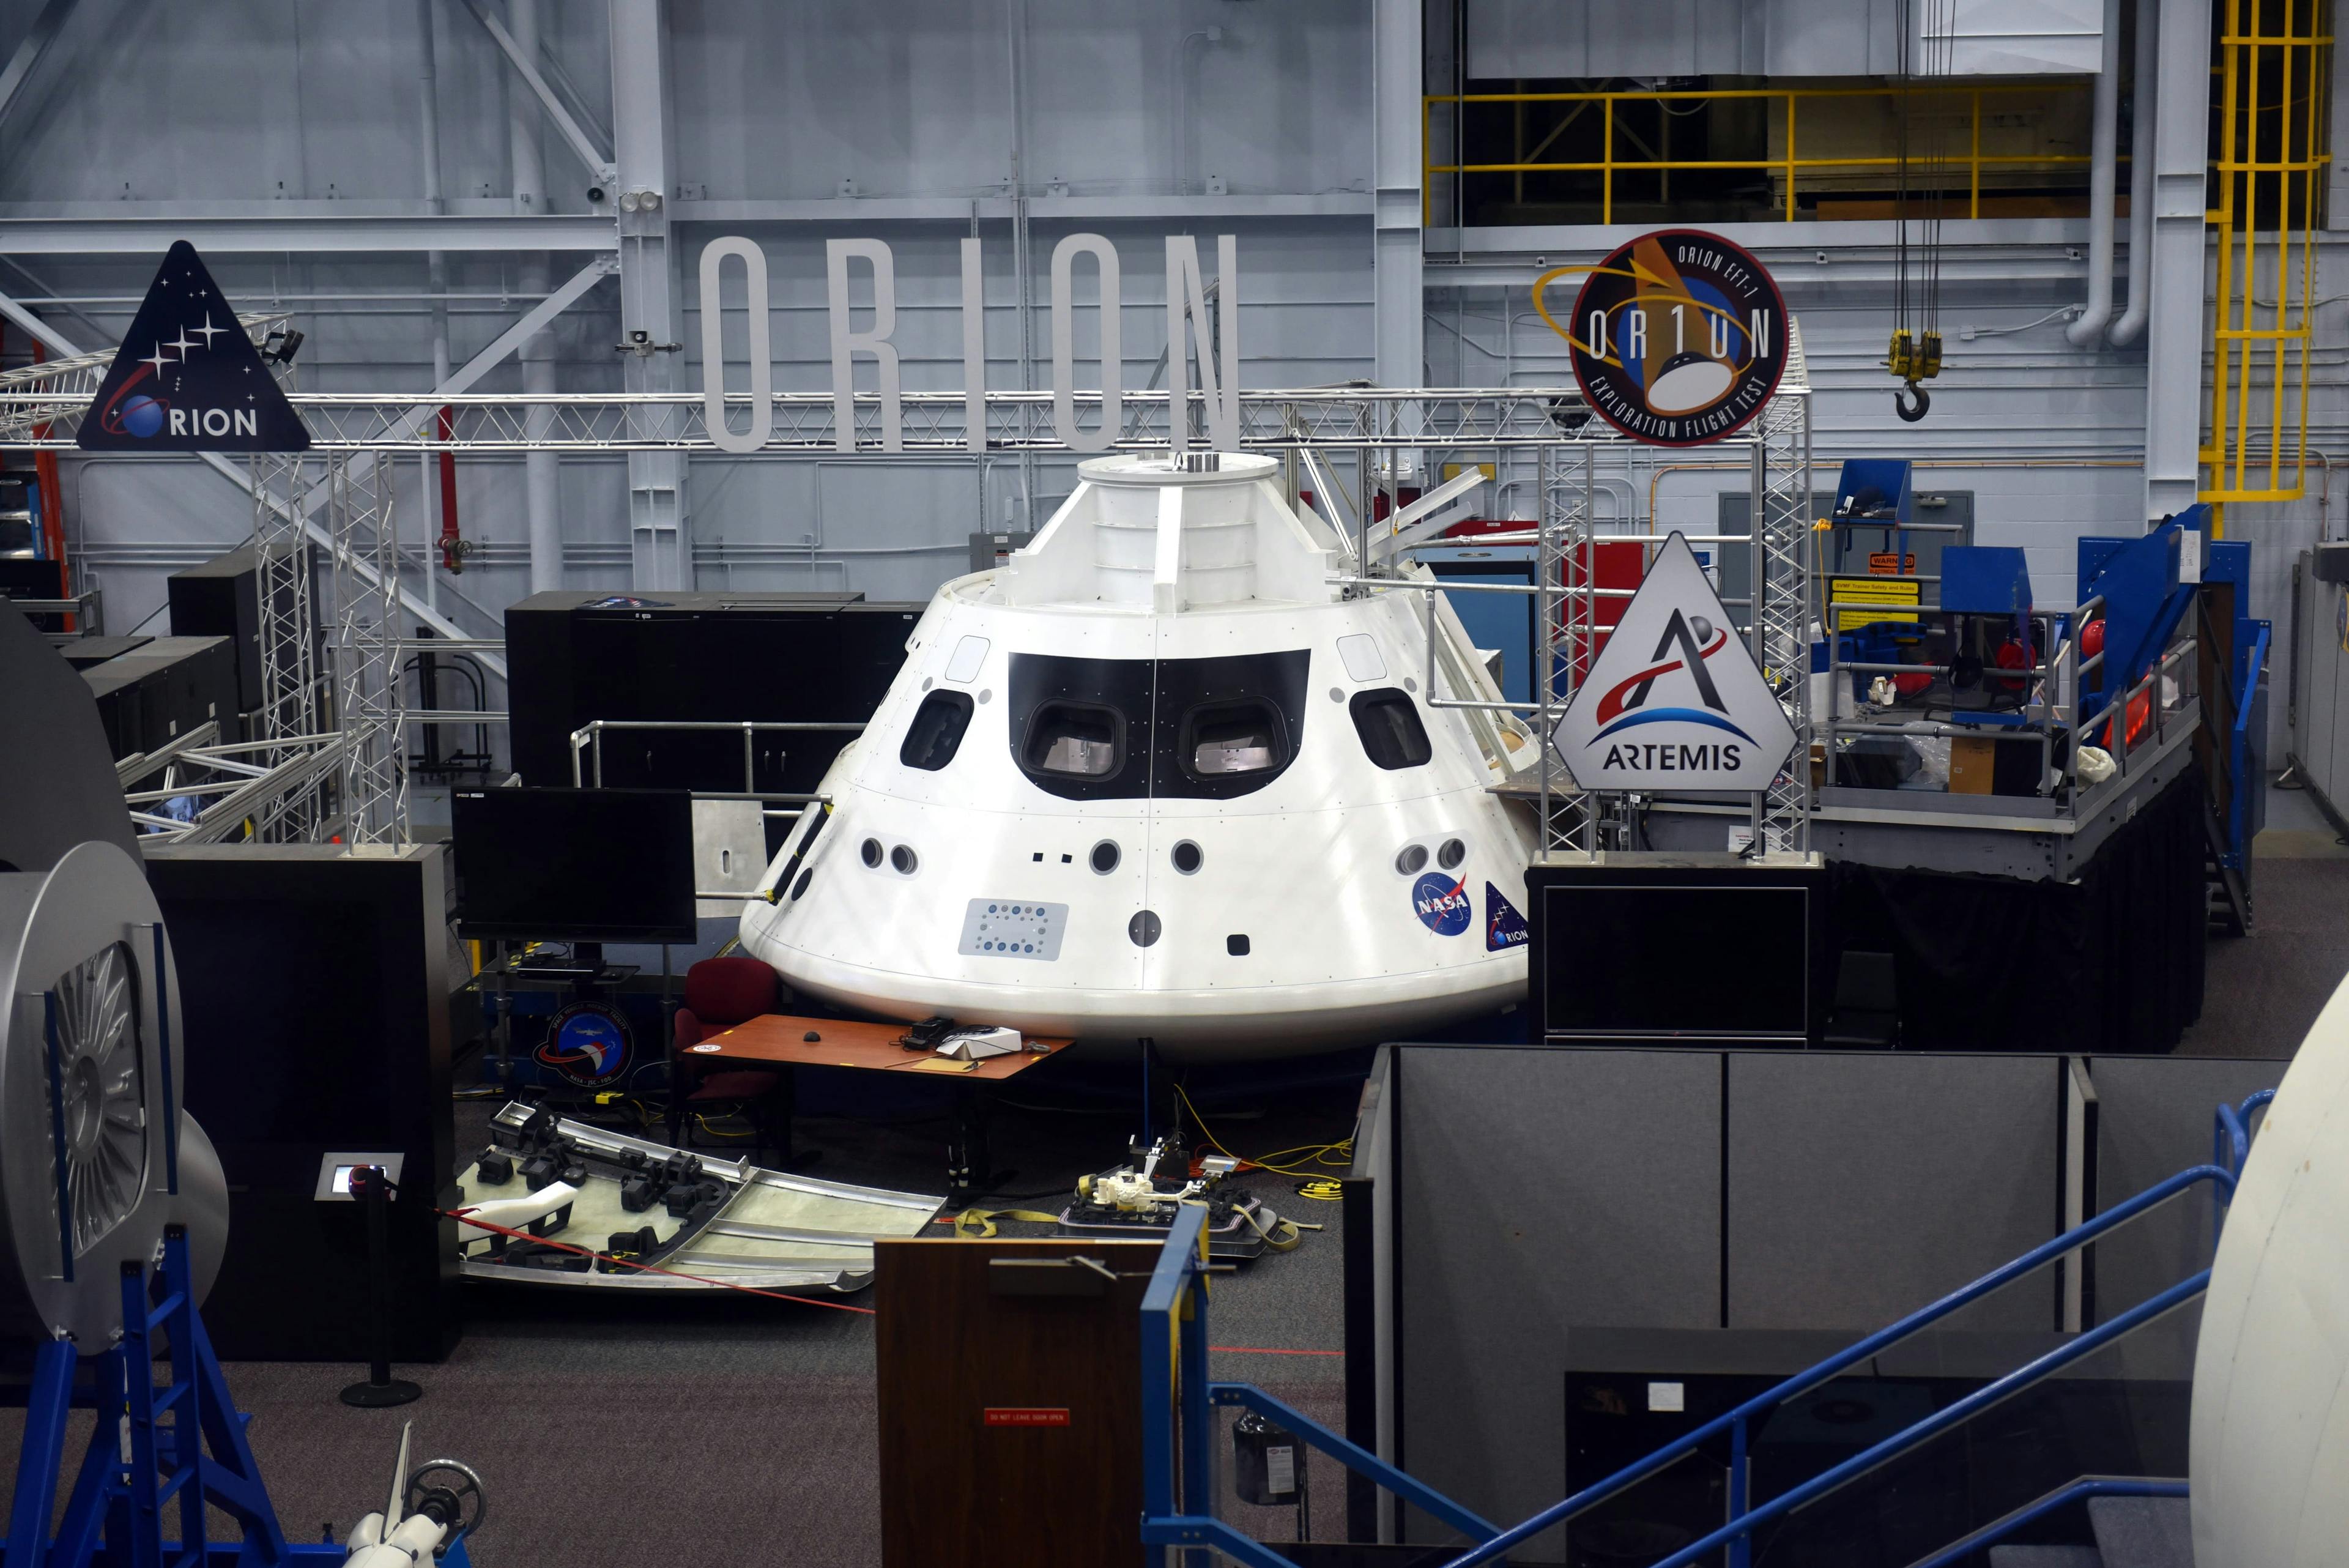 NASA training area at Space Center Houston